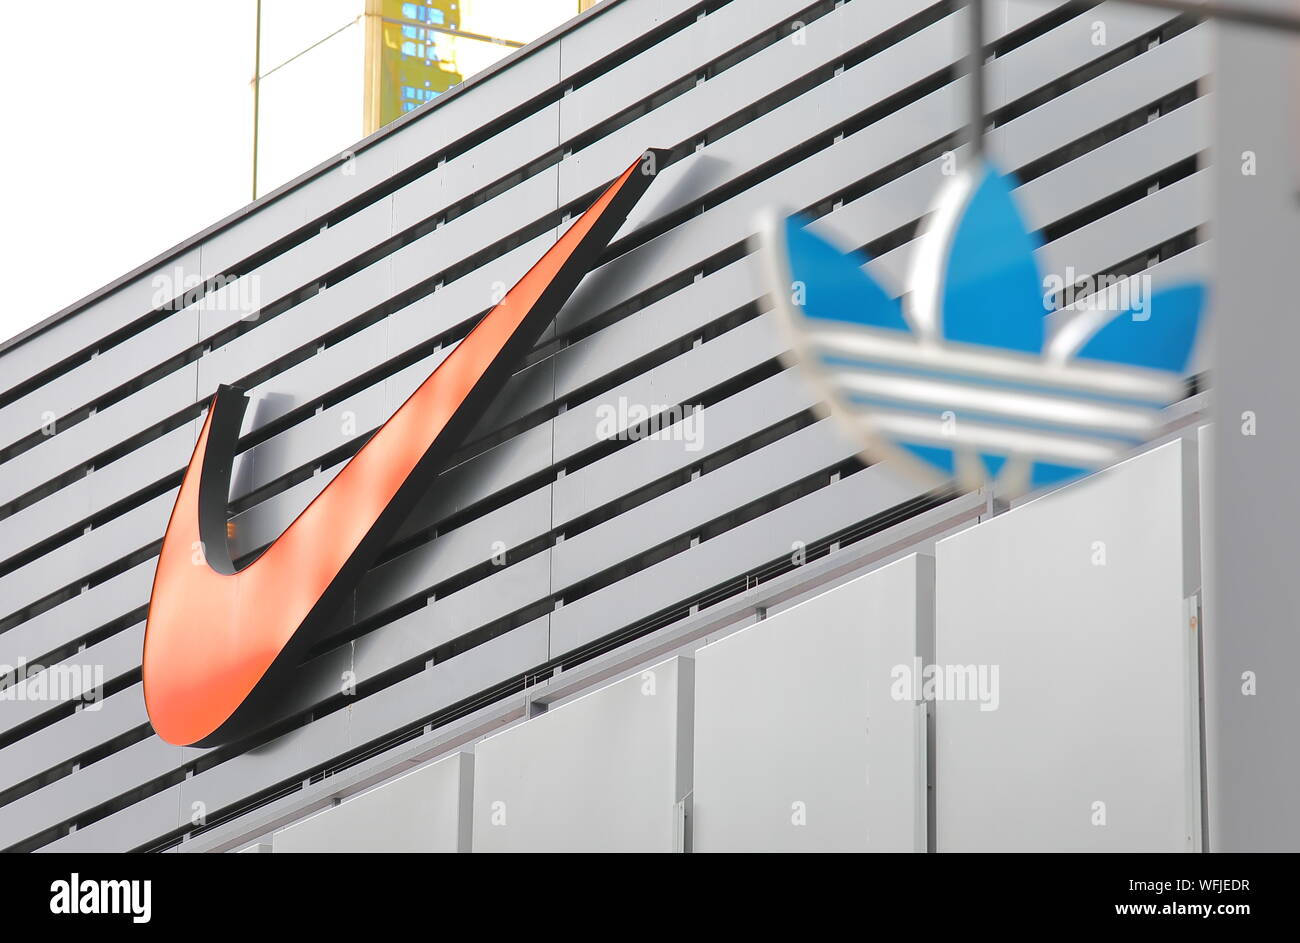 Nike company logo and Adidas company logo in foreground Stock Photo - Alamy